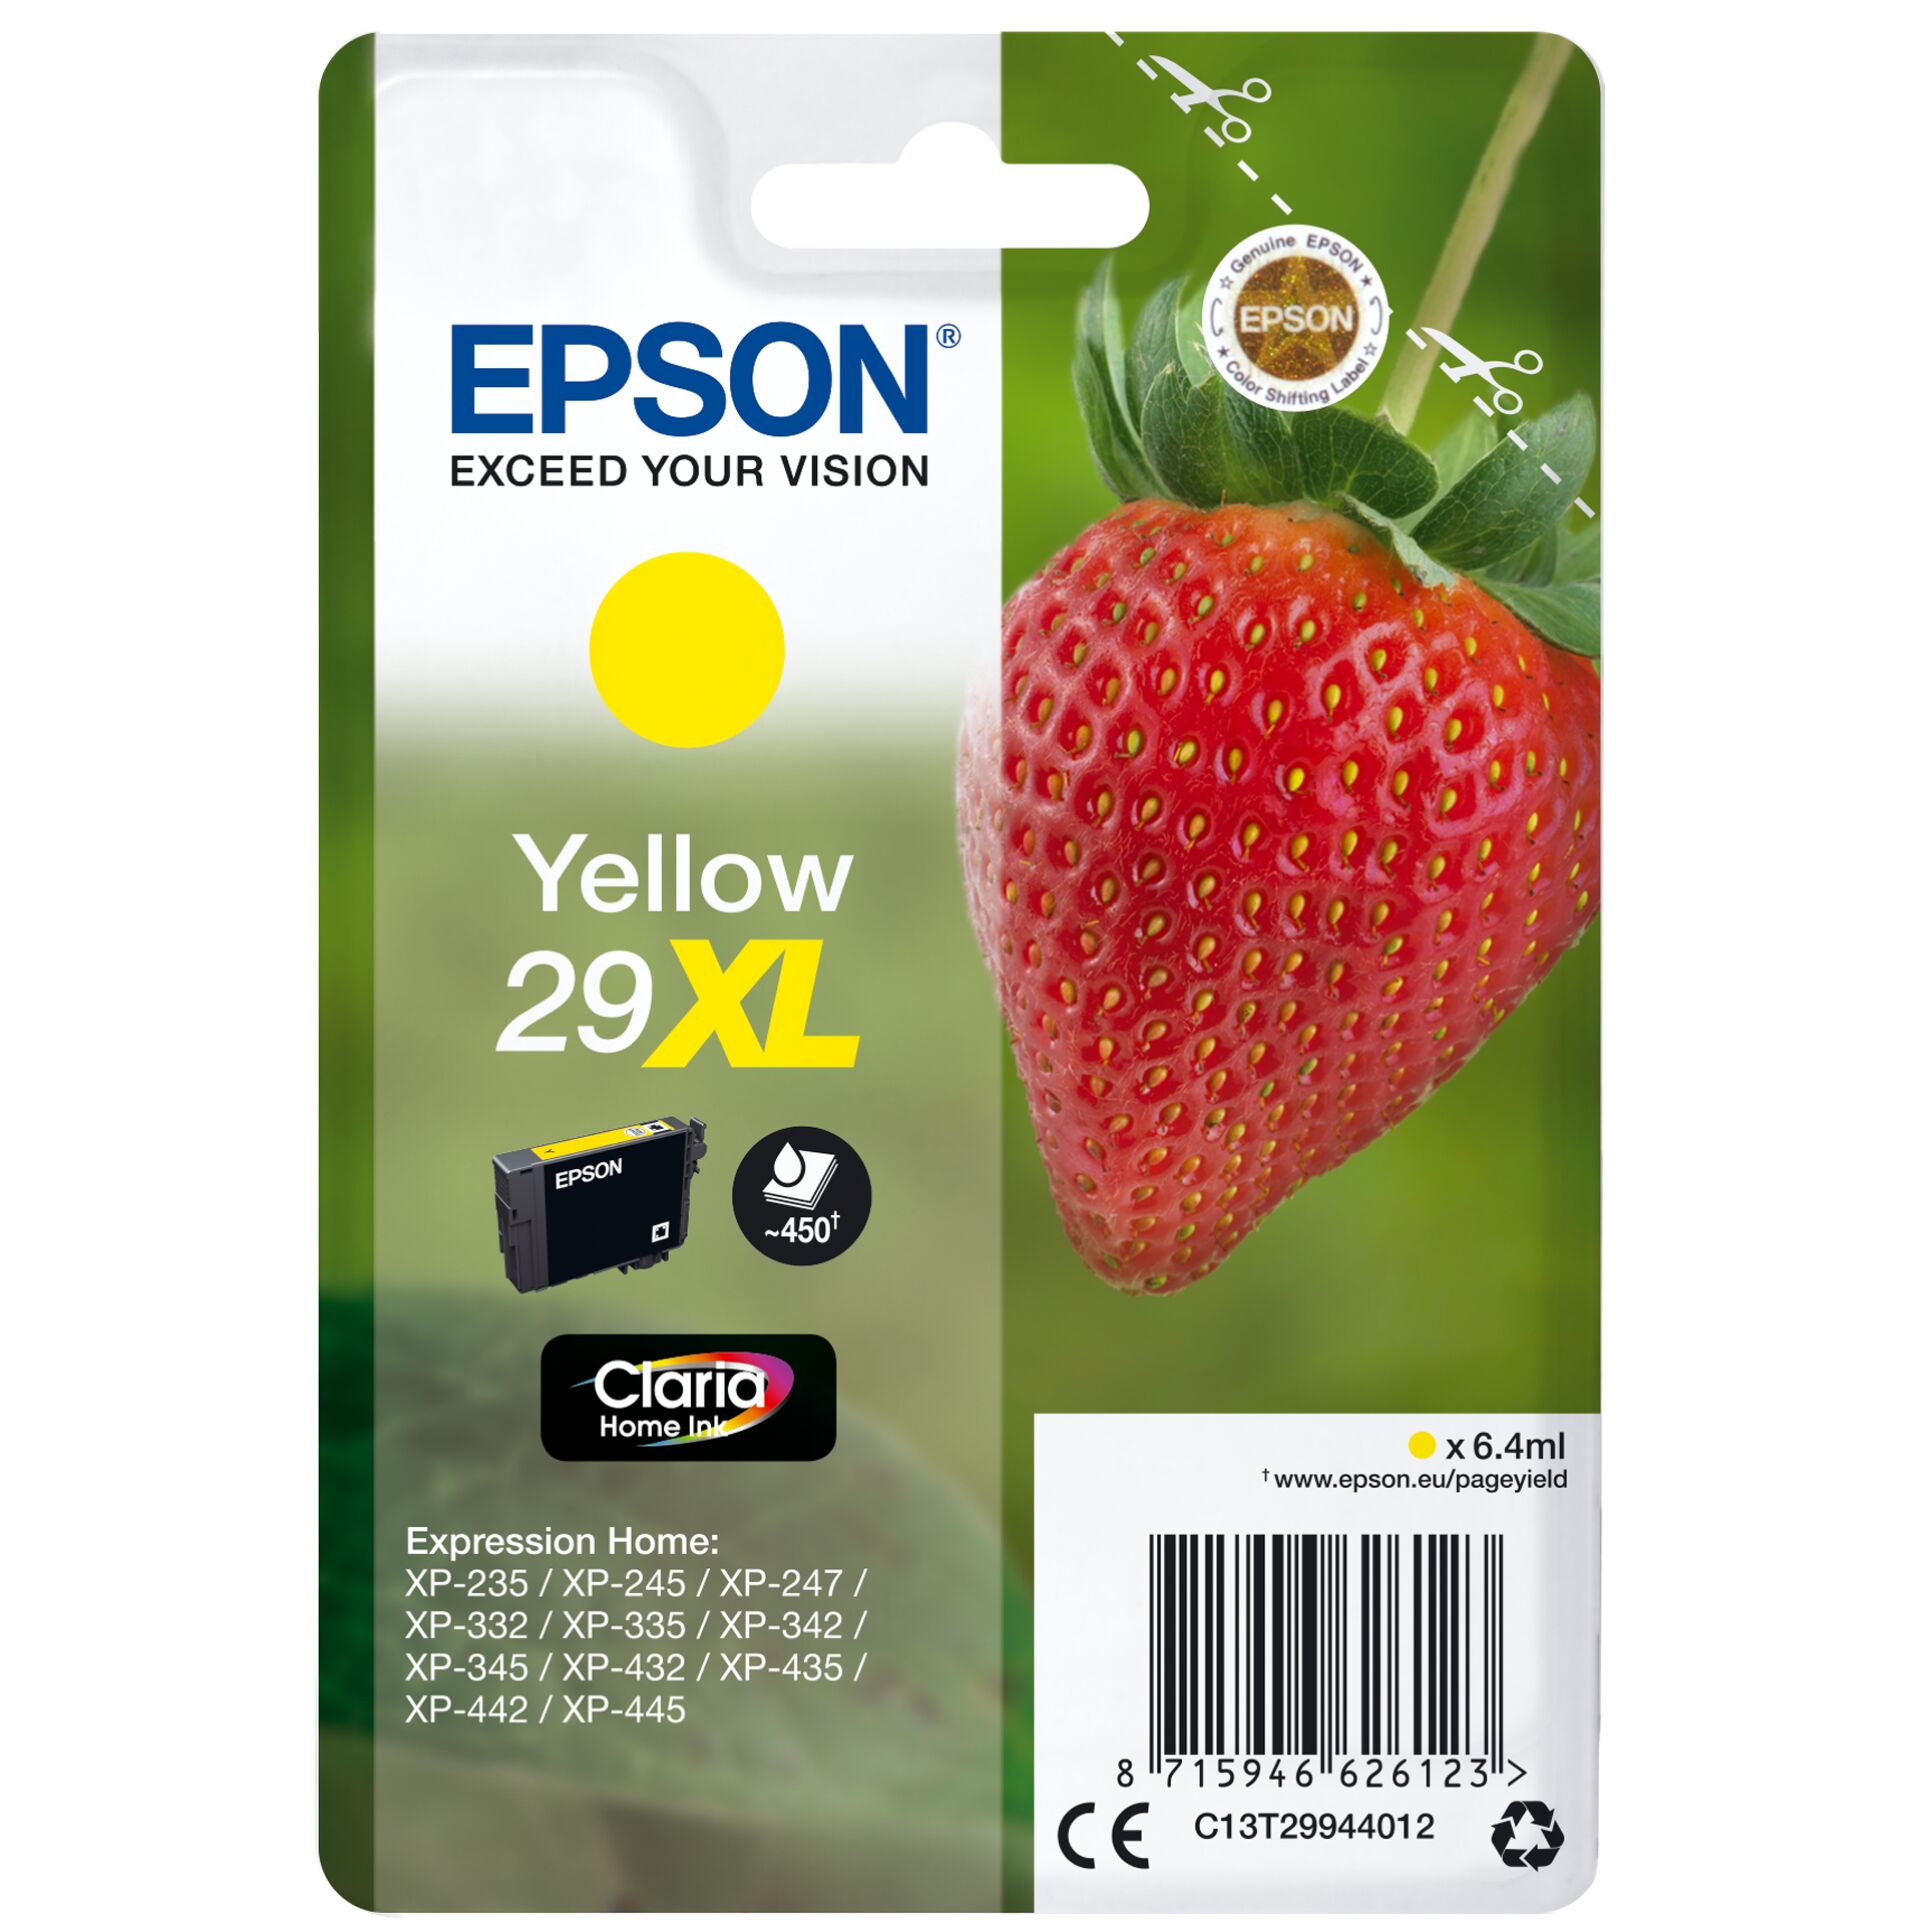 Epson Tinte 29XL gelb, 6.4ml 